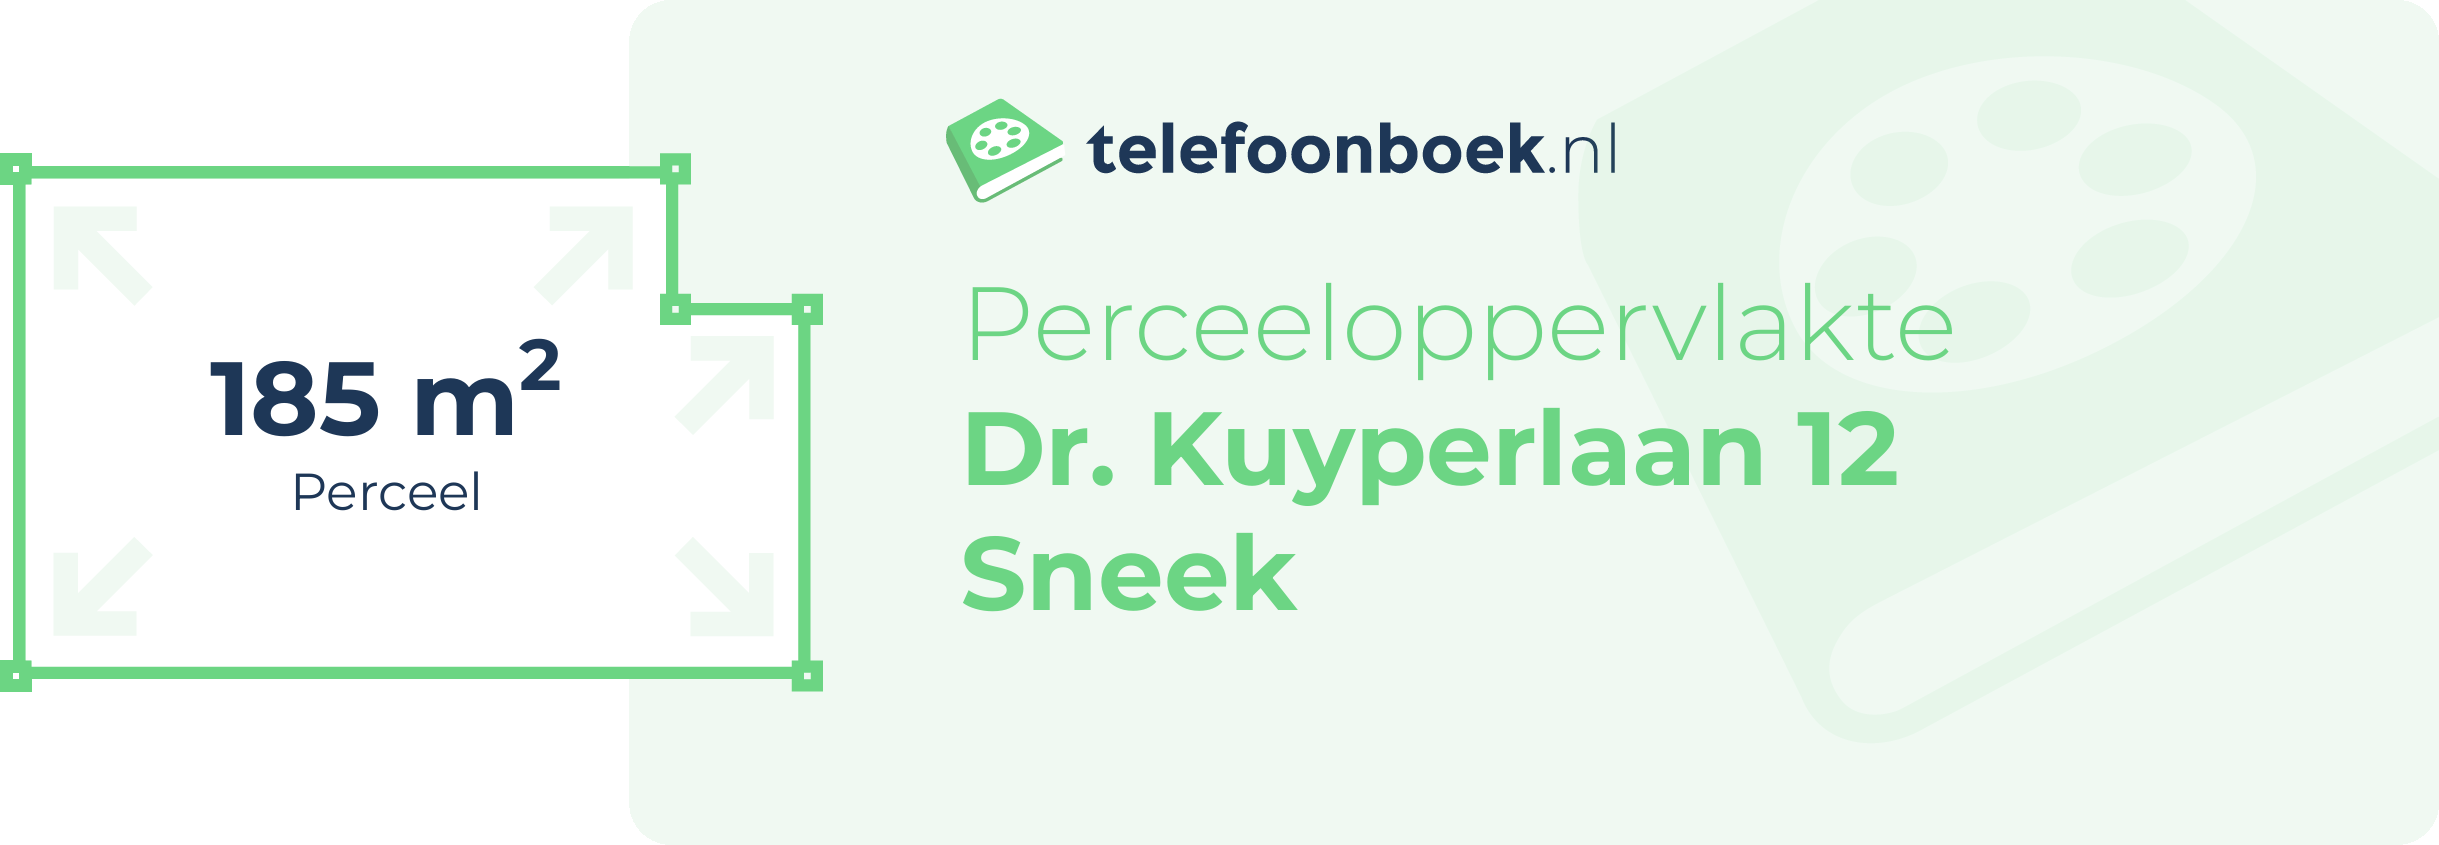 Perceeloppervlakte Dr. Kuyperlaan 12 Sneek